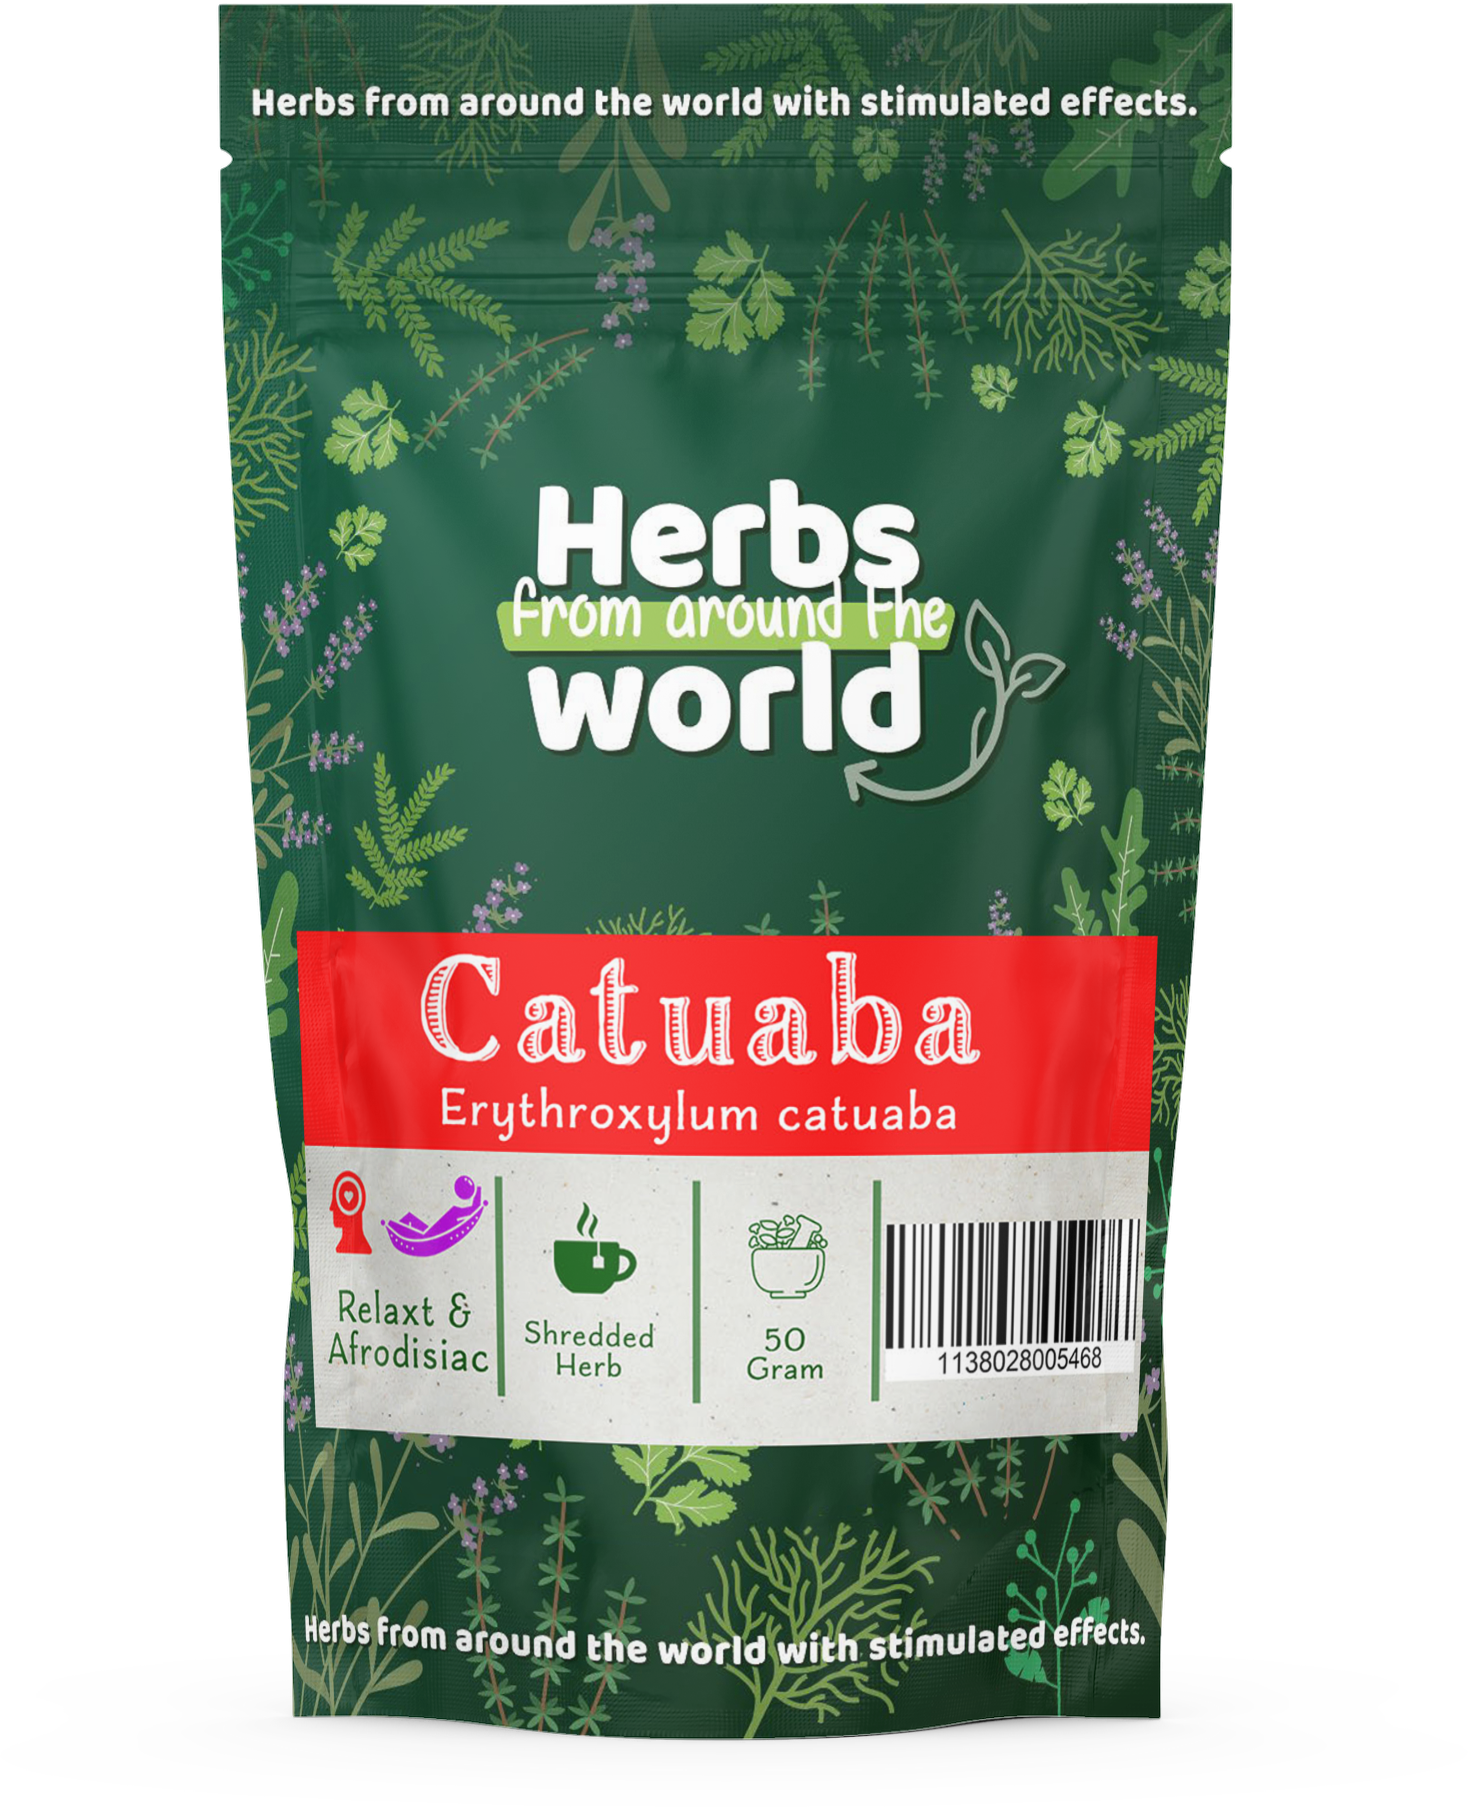 Catuaba - Erythroxylum catuaba